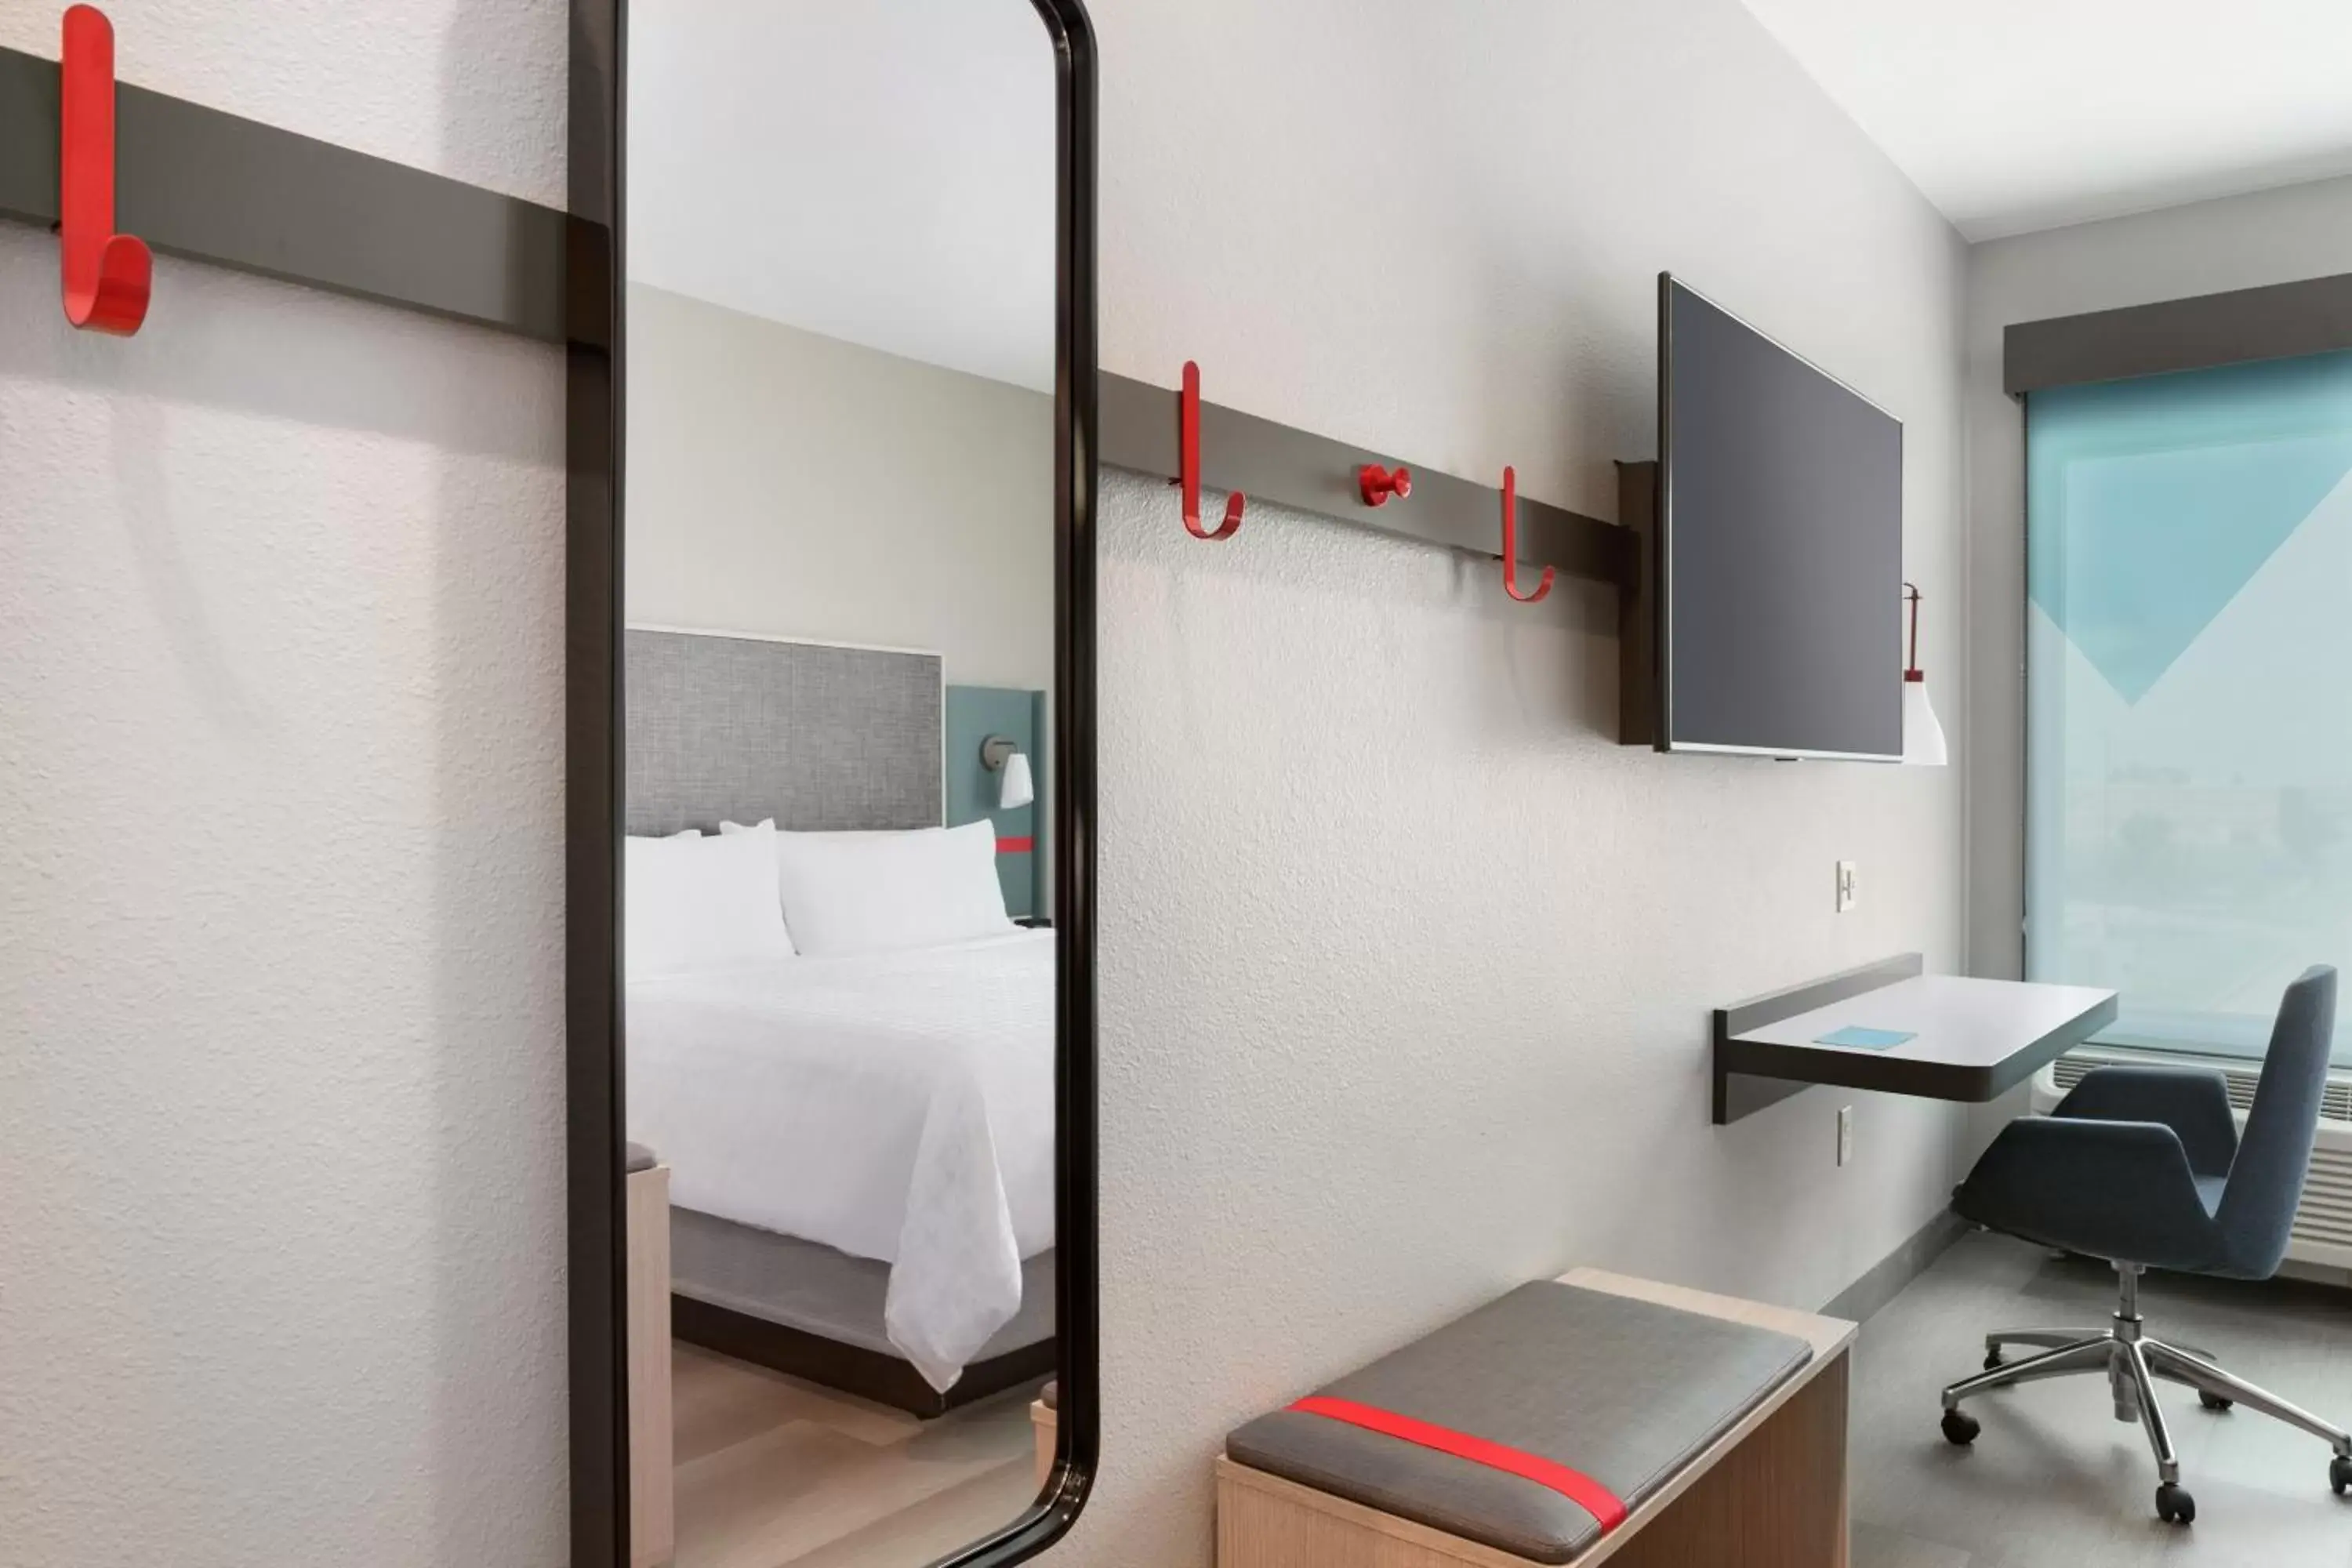 Bed in avid hotels - Orlando International Airport, an IHG Hotel